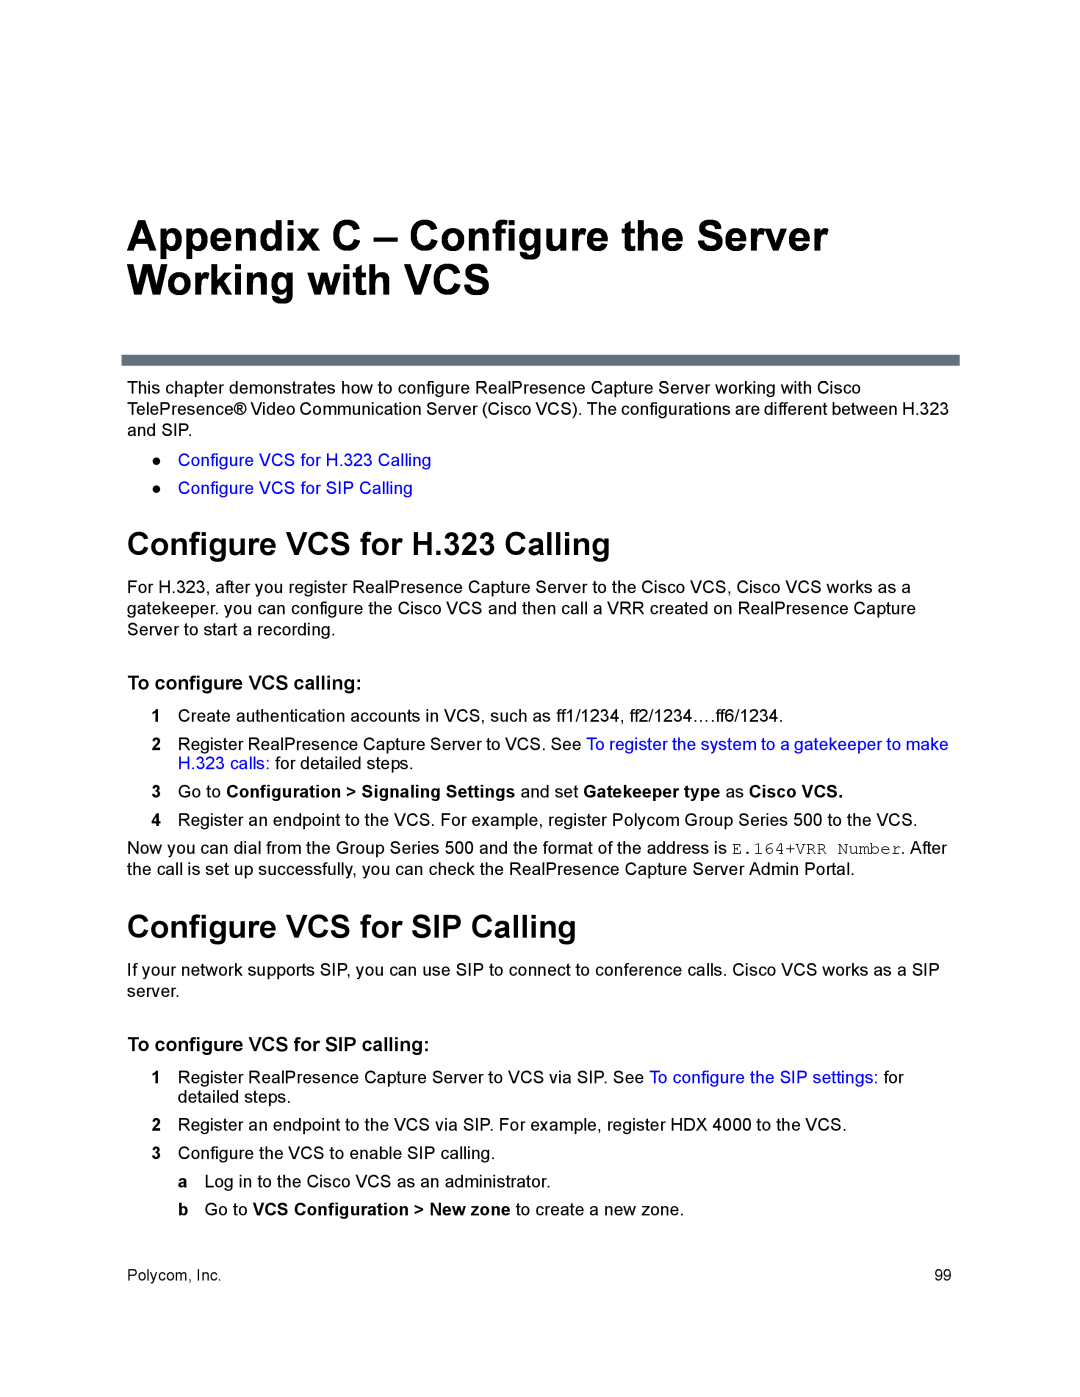 Polycom 40/0 Appendix C - Configure the Server Working with VCS, Configure VCS for H.323 Calling, To configure VCS calling 